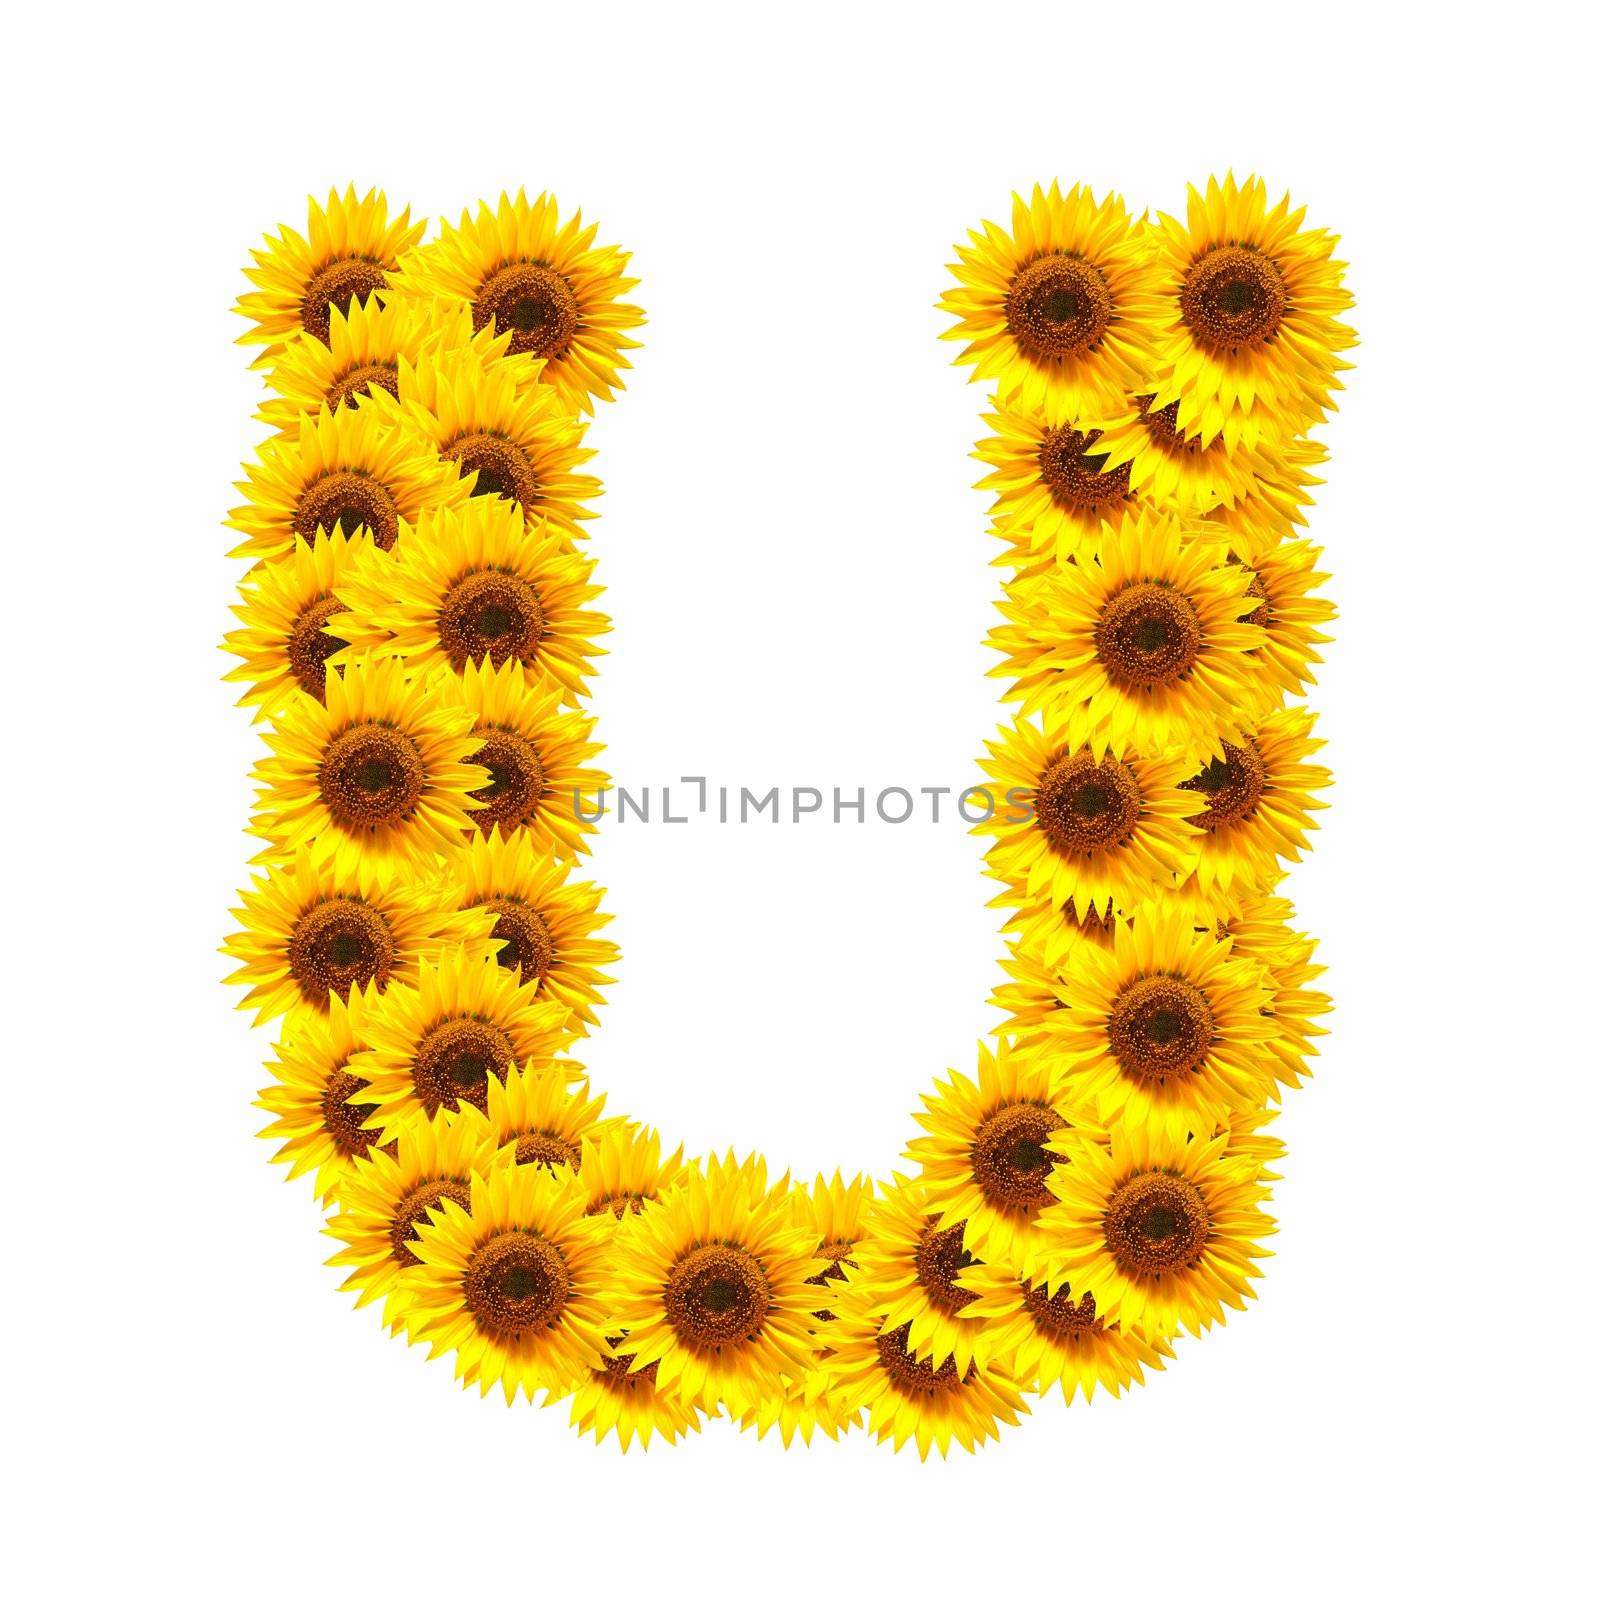 alphabet of flowers by gunnar3000